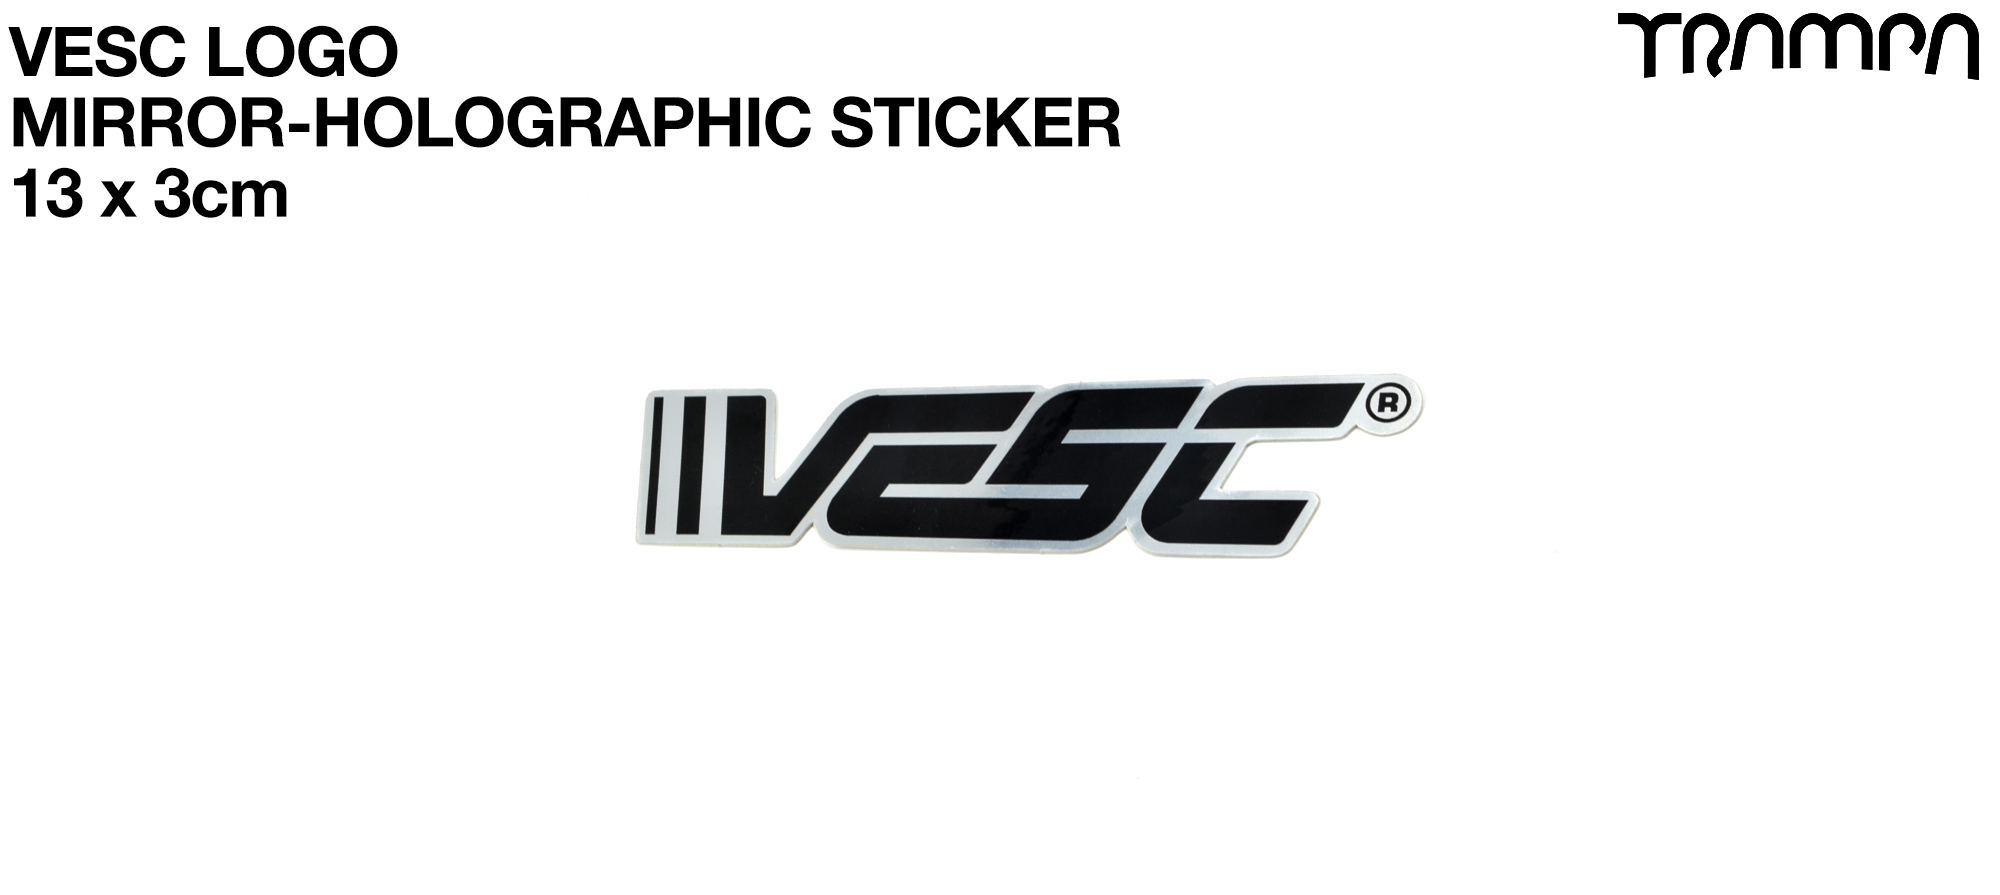 13.1 x 3 VESC Holographic Sticker - V2